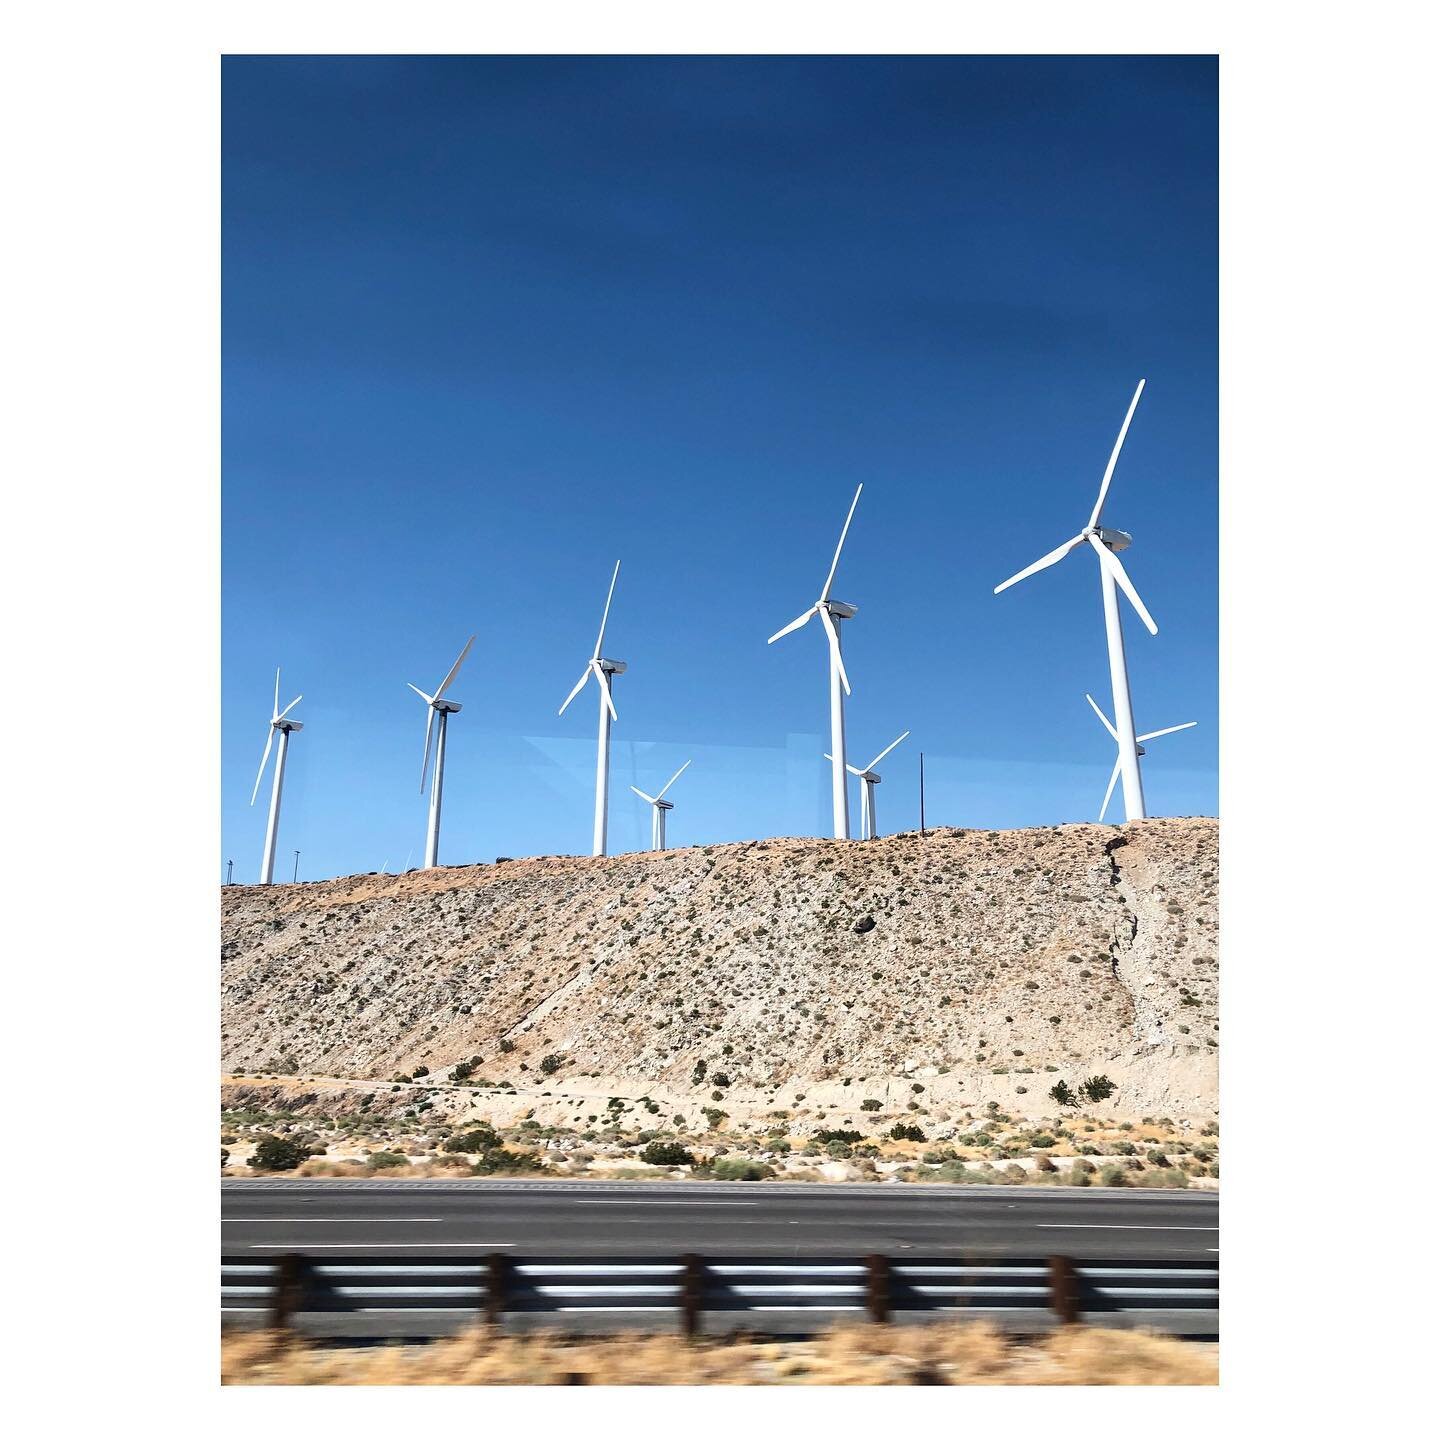 🌬 Windmill in the desert
.
.
.
#windturbine #wind #desert #california #palmsprings #usa #road #freeway #america #electricity #energy @californiaholics @caliloveofficial @california4fun @californiathroughmylens